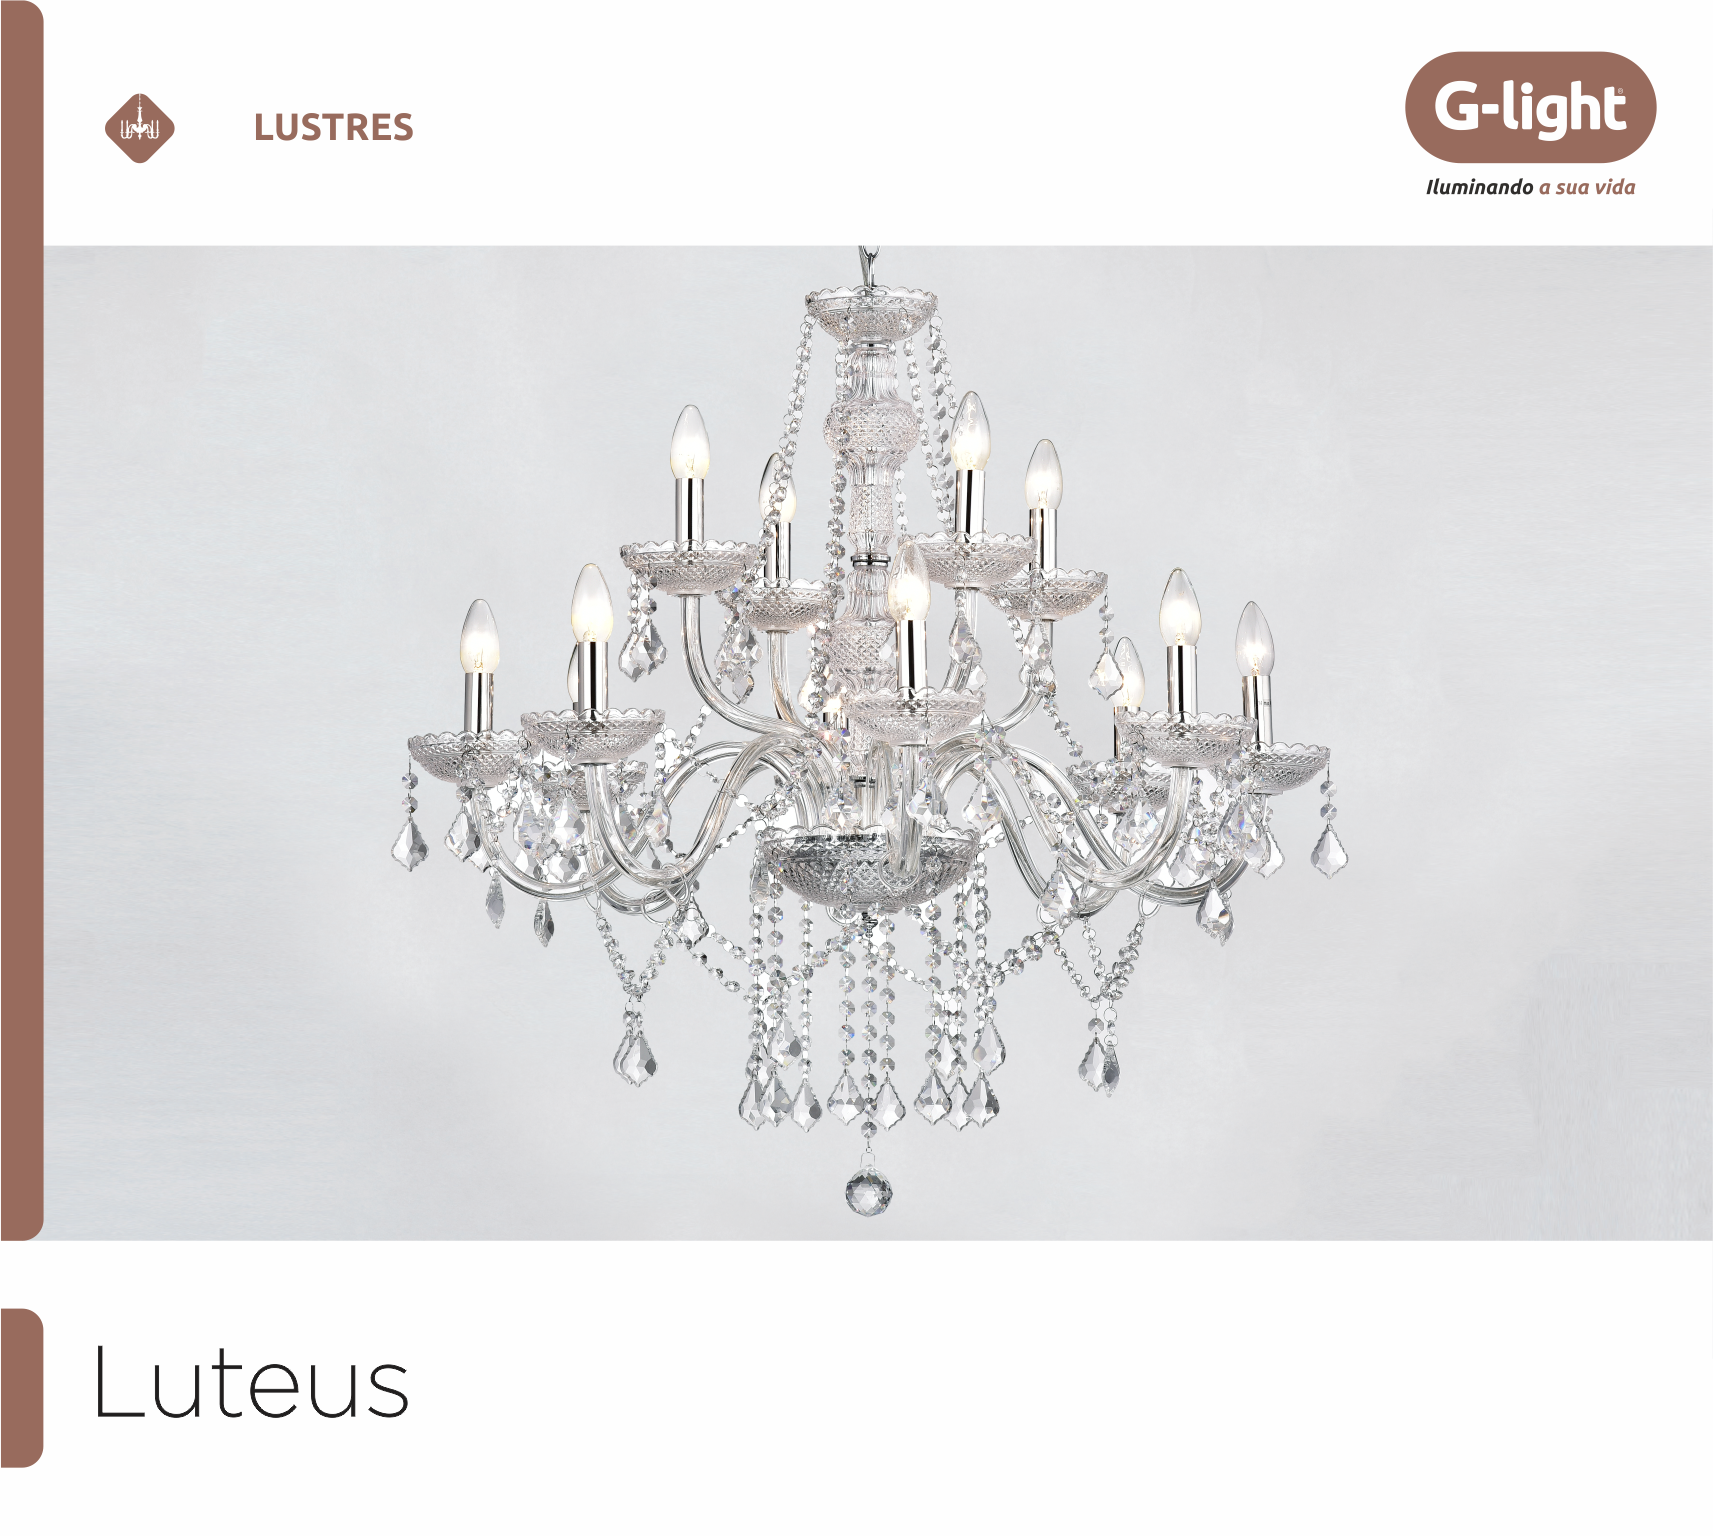 Luteus